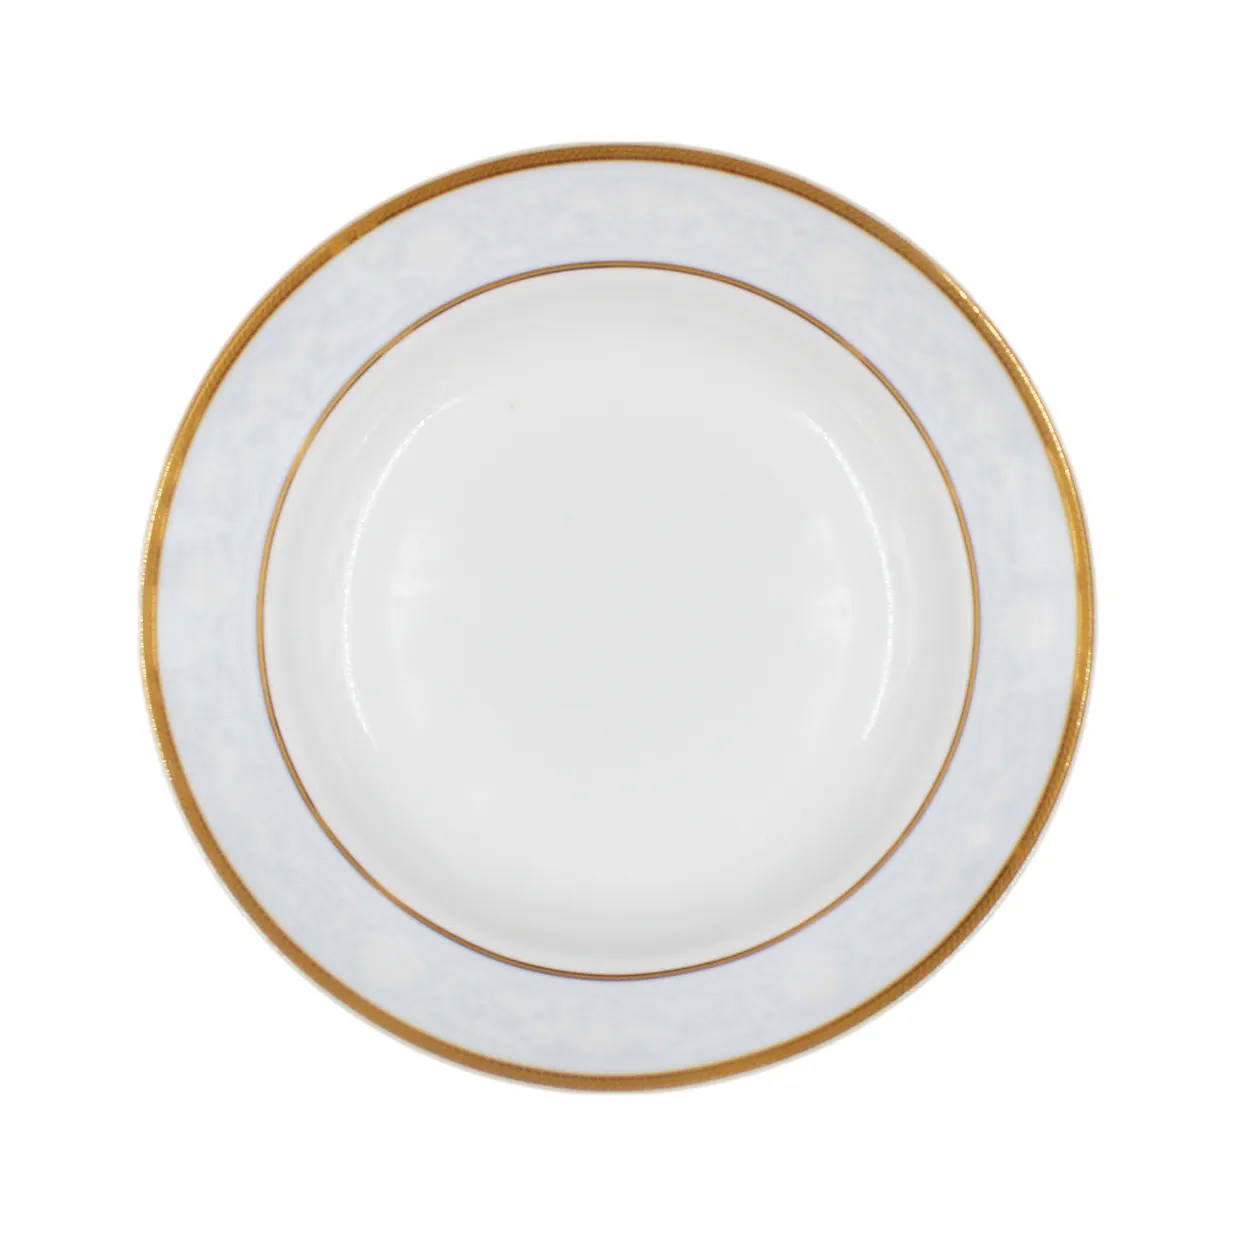 Weiße Porzellan Serviert eller Geschirr